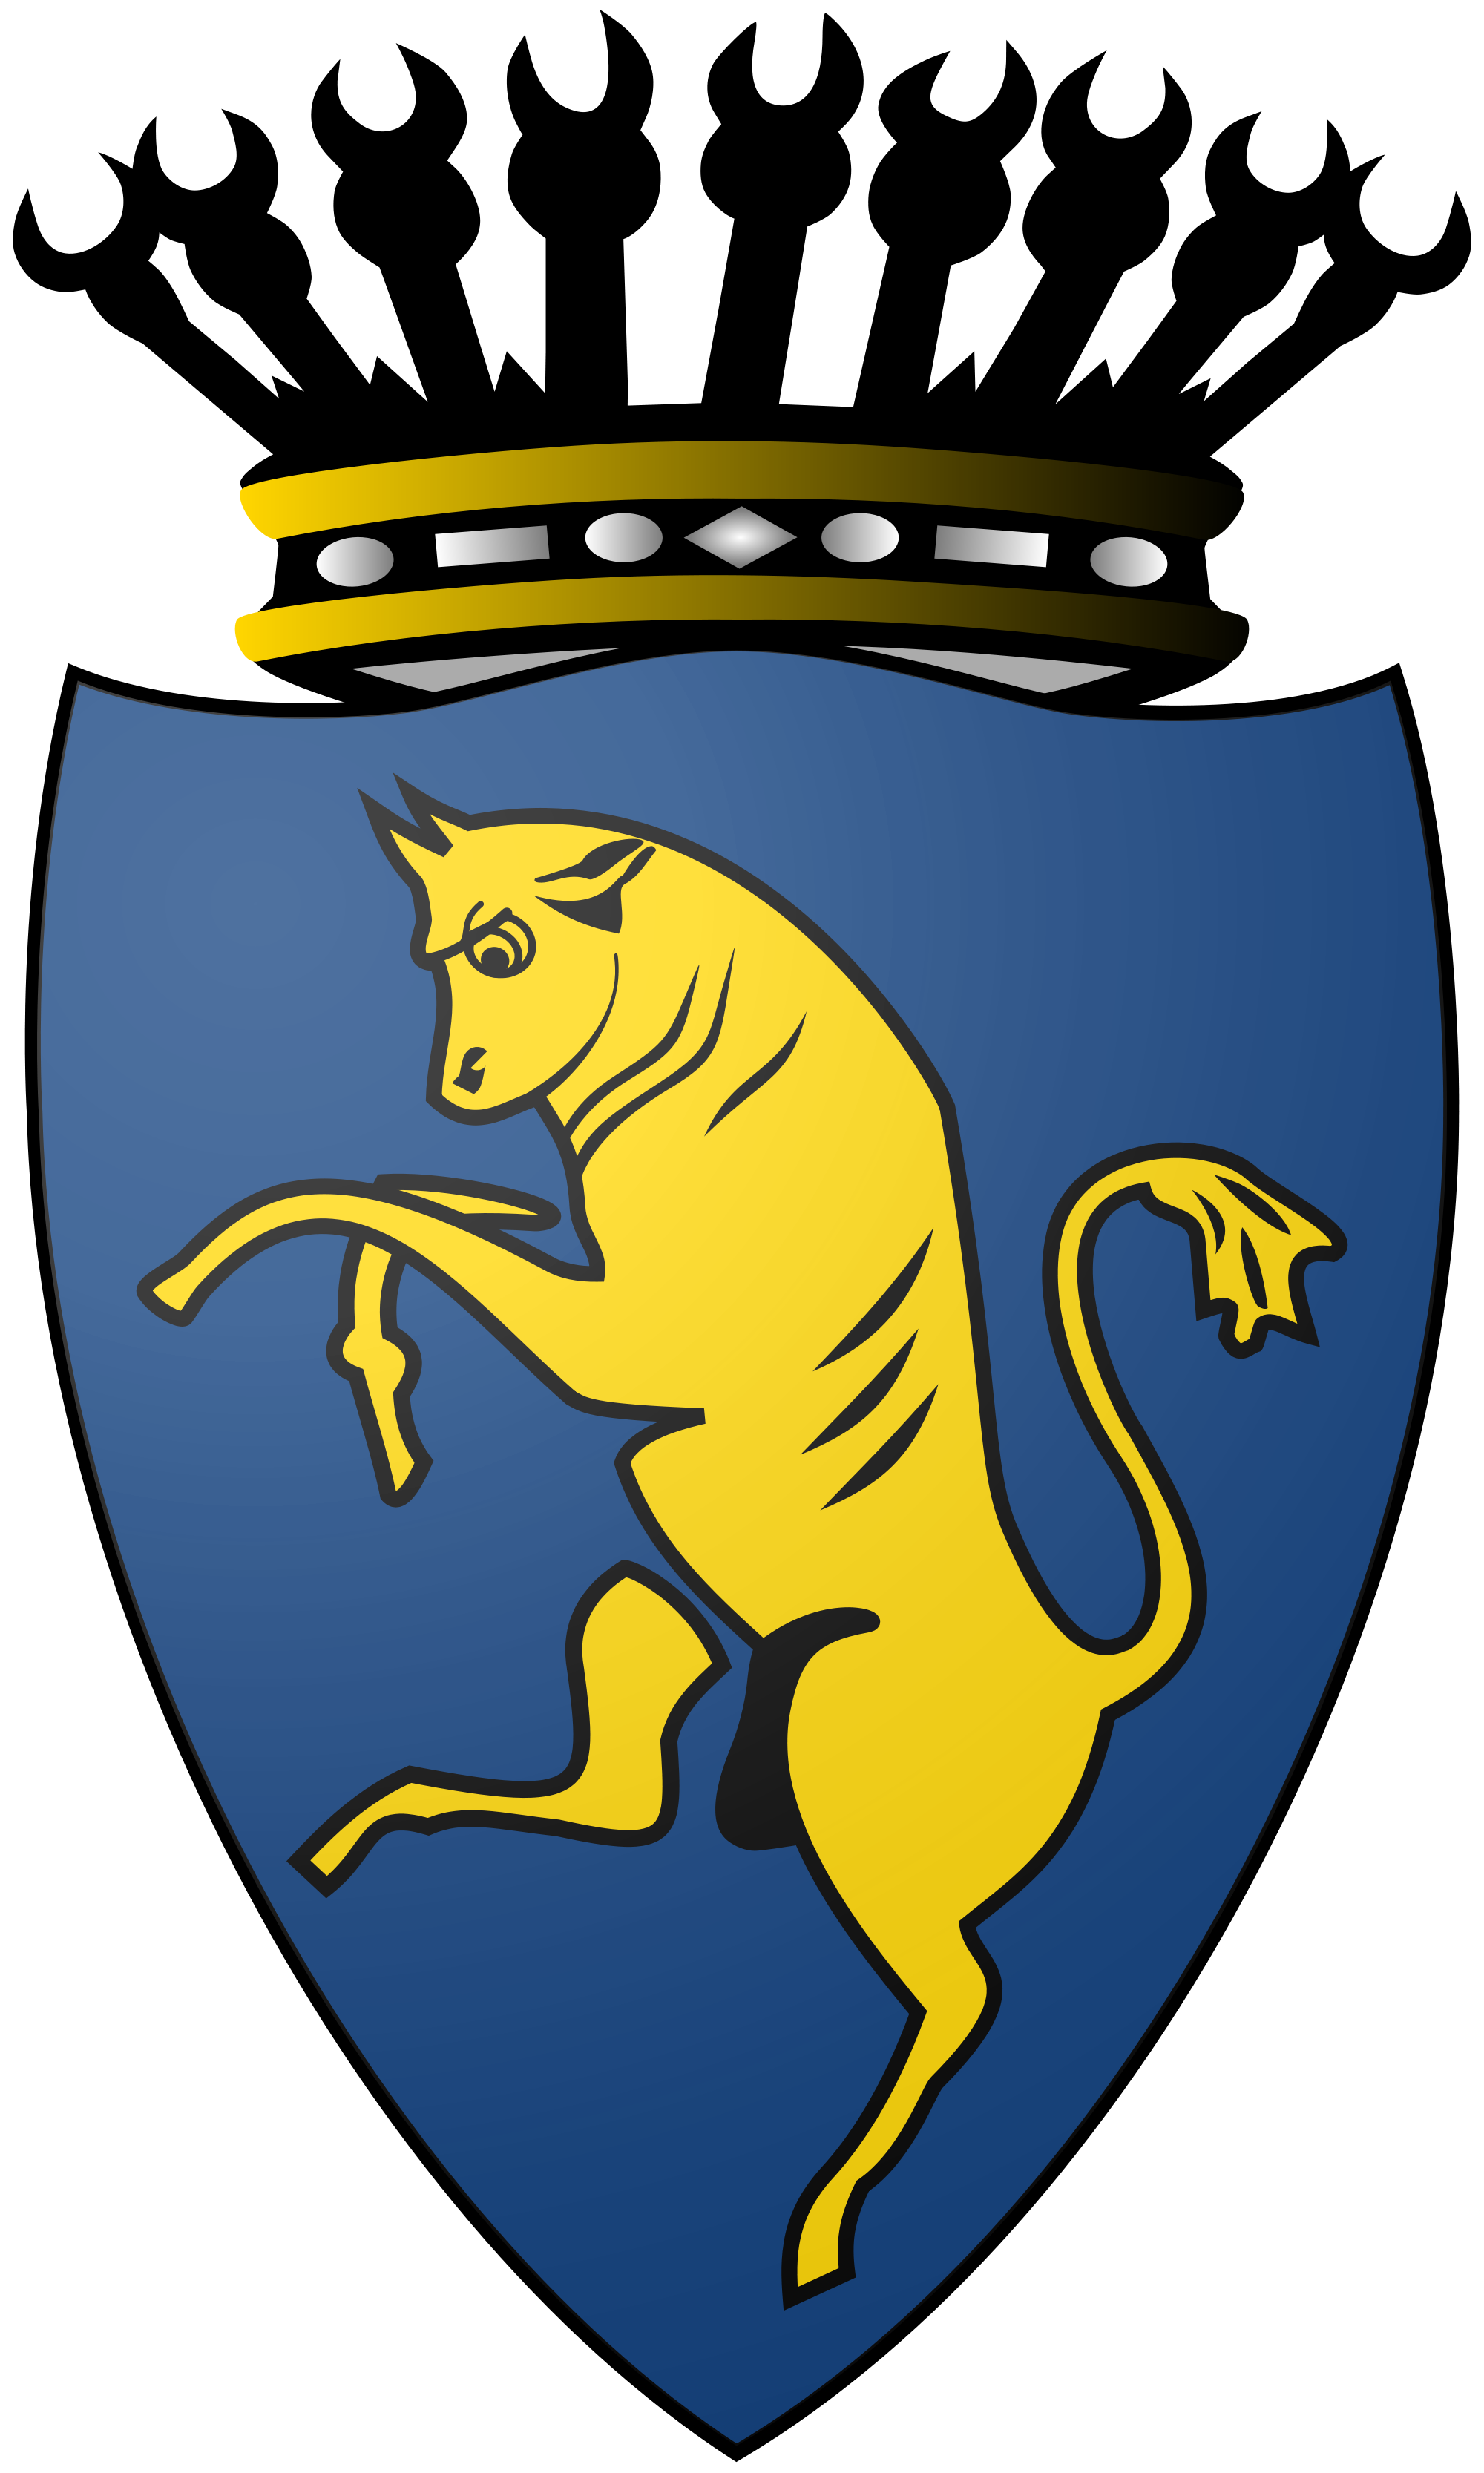 Turin coat of arms. Rome clipart symbol italian